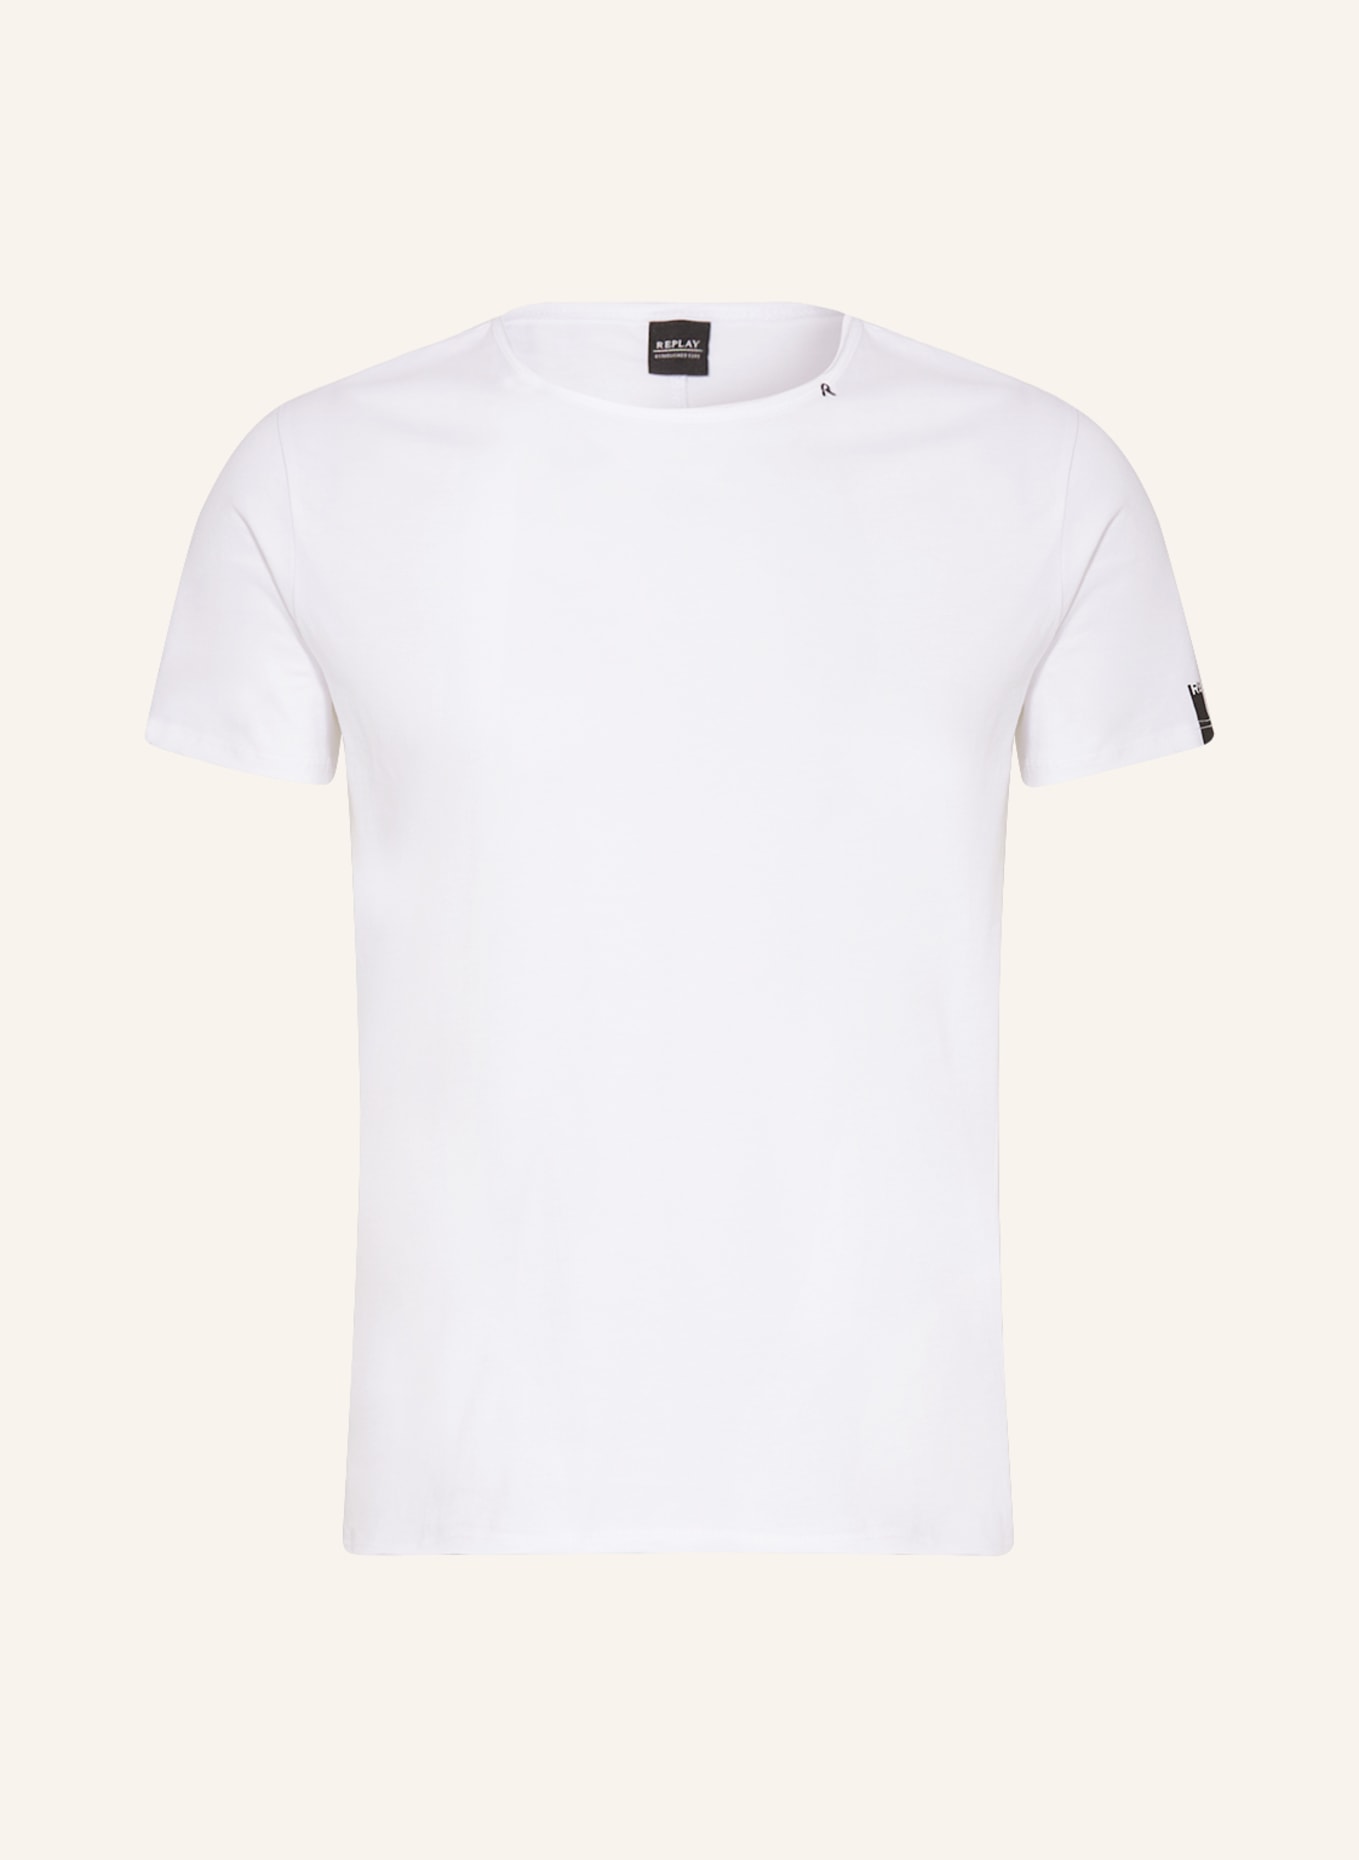 REPLAY T-shirt in white